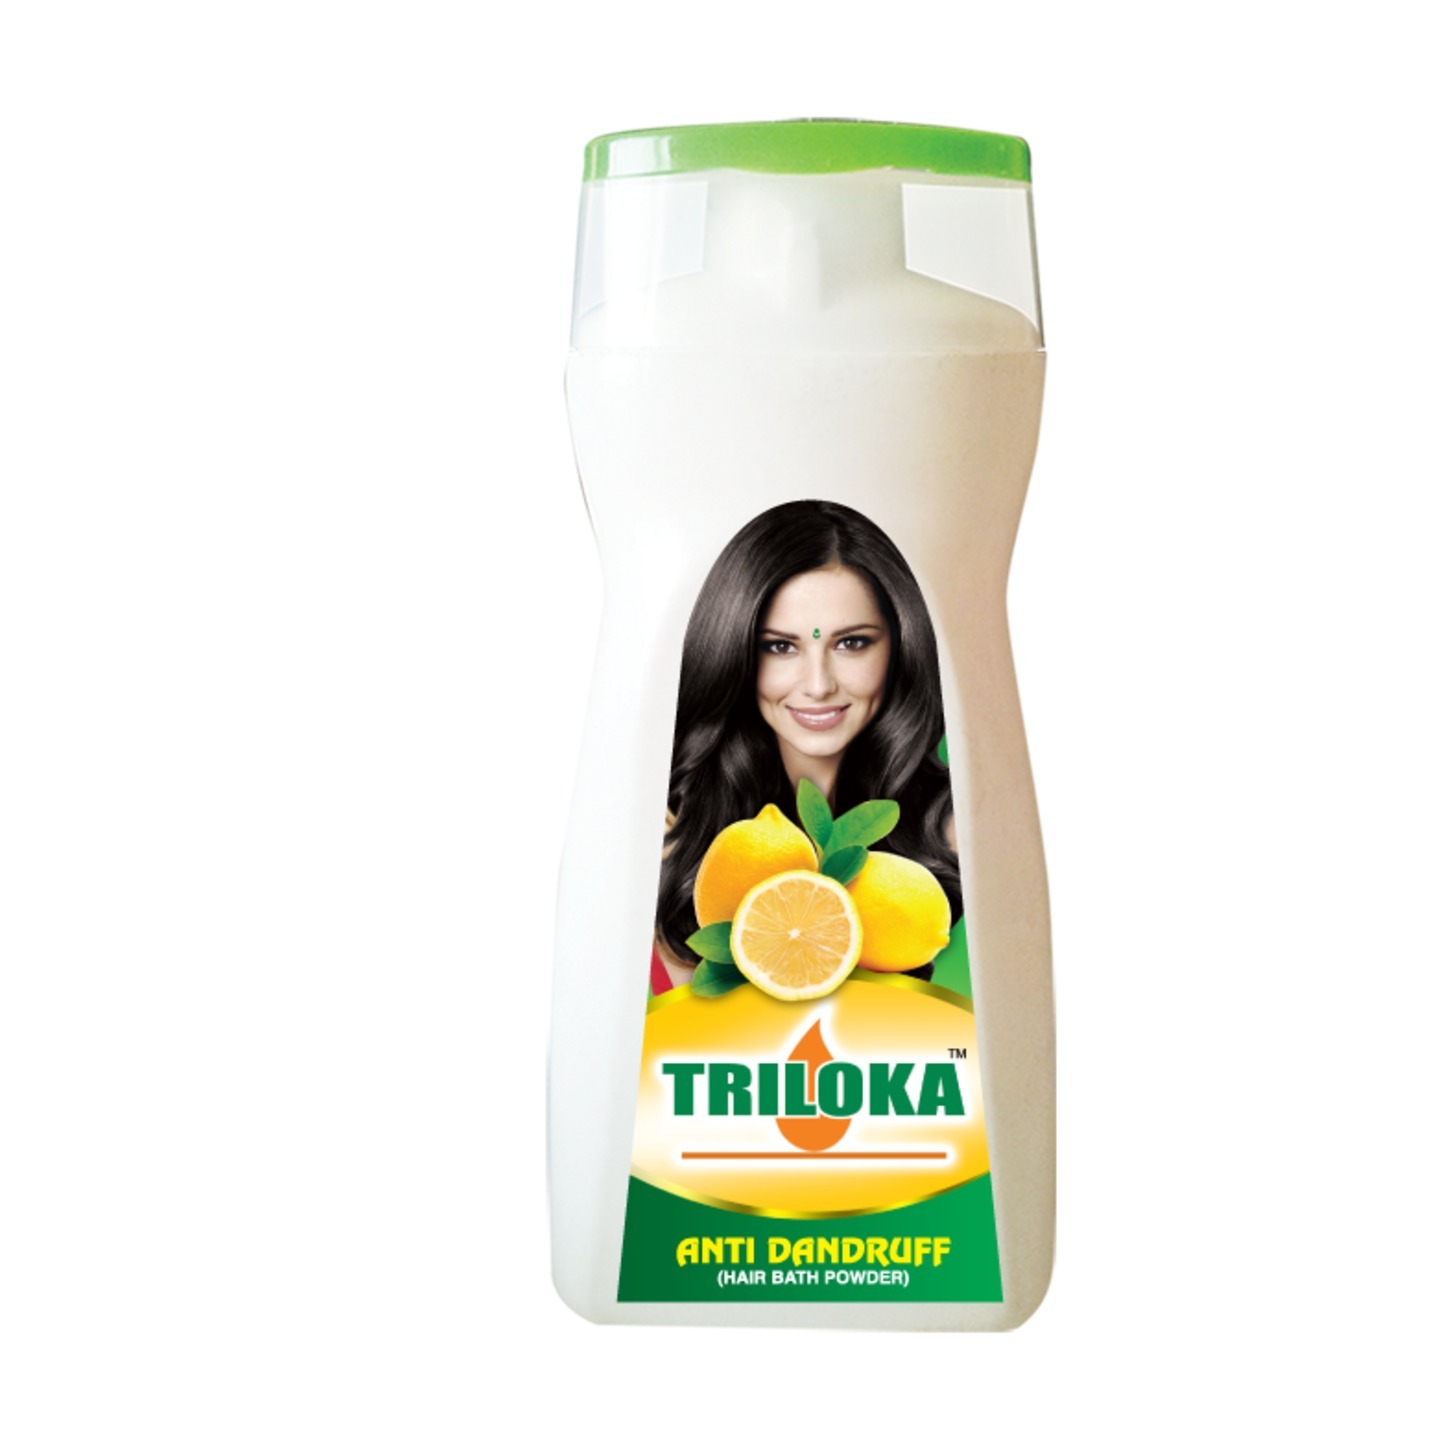 New Triloka Anti Dandruff Hair Bath Powder Bottle